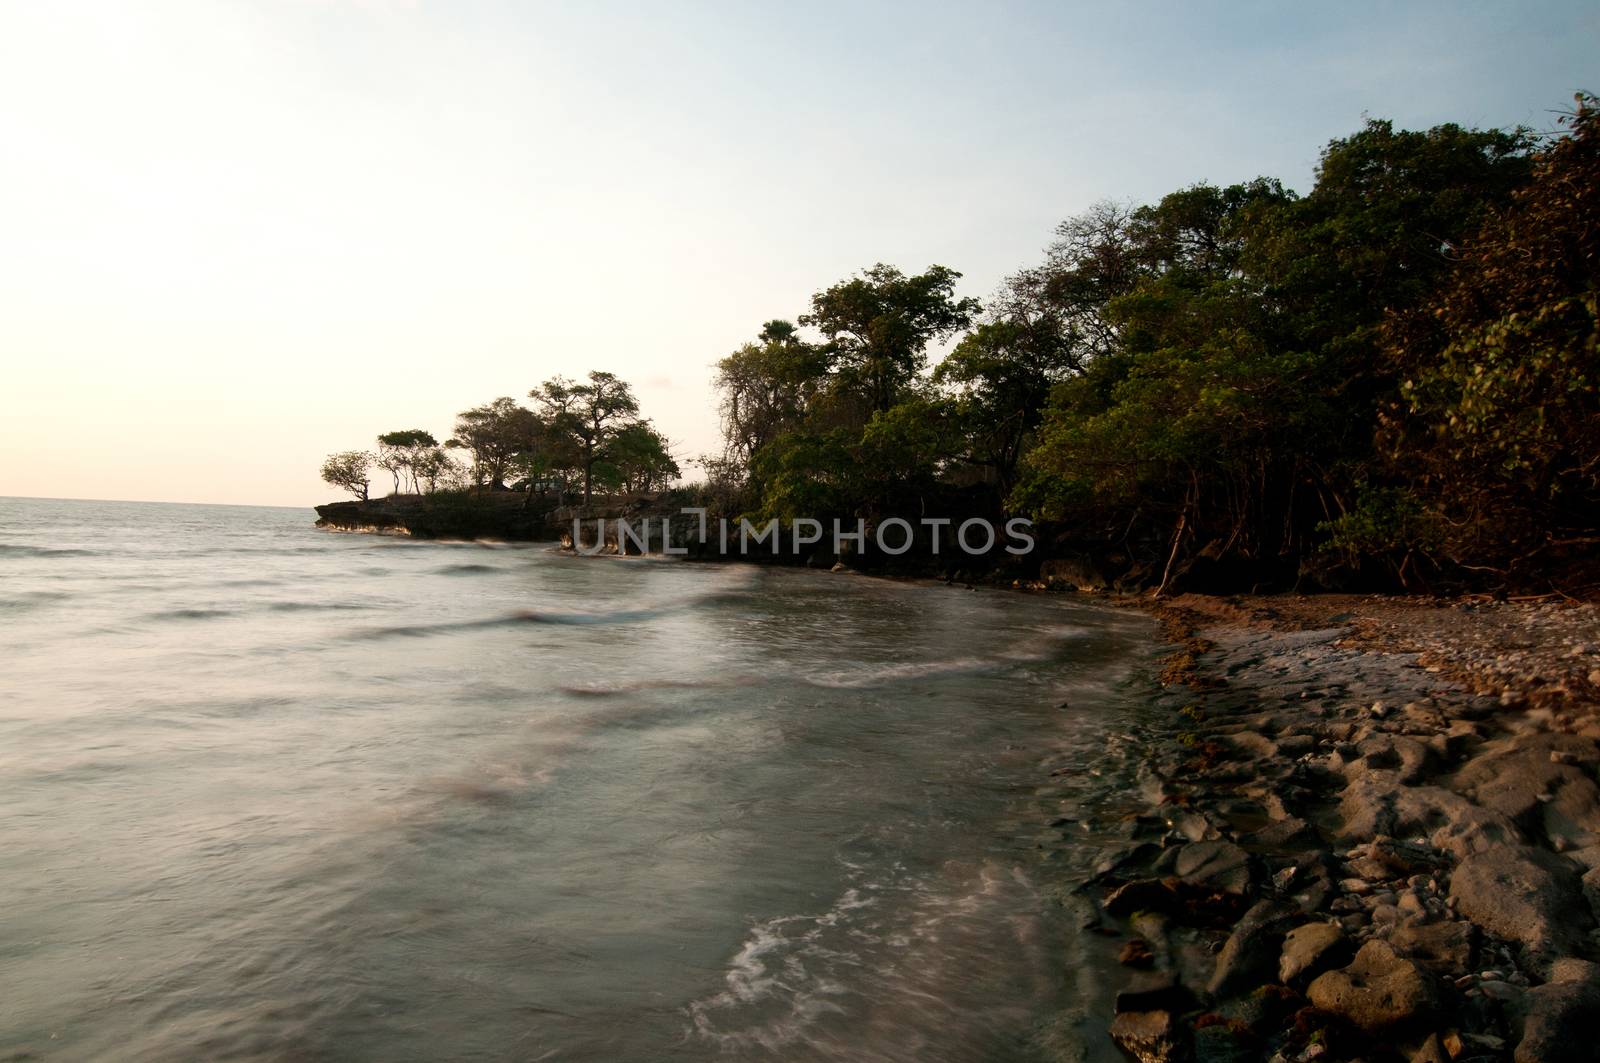 Panorama Topejawa beach at Takalar Indonesia